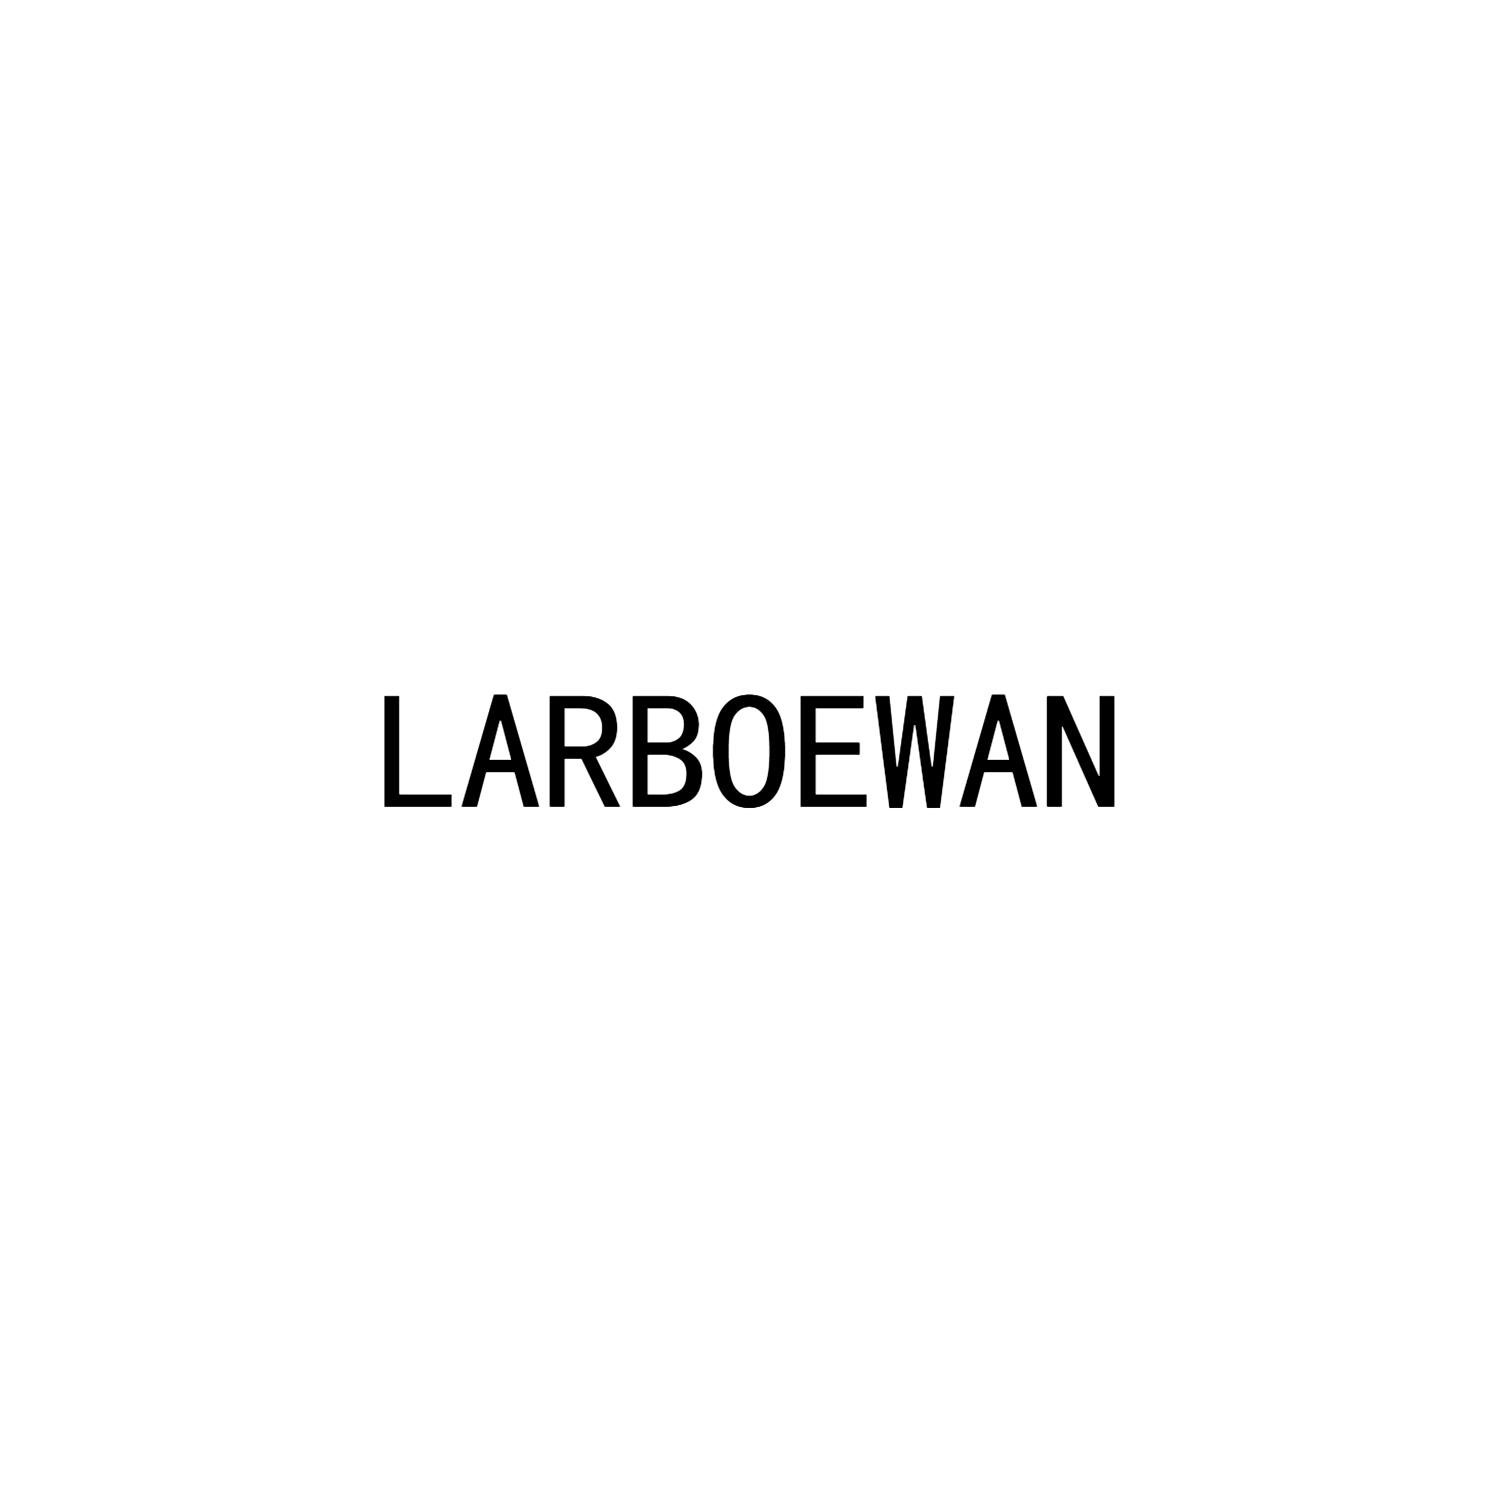 LARBOEWAN